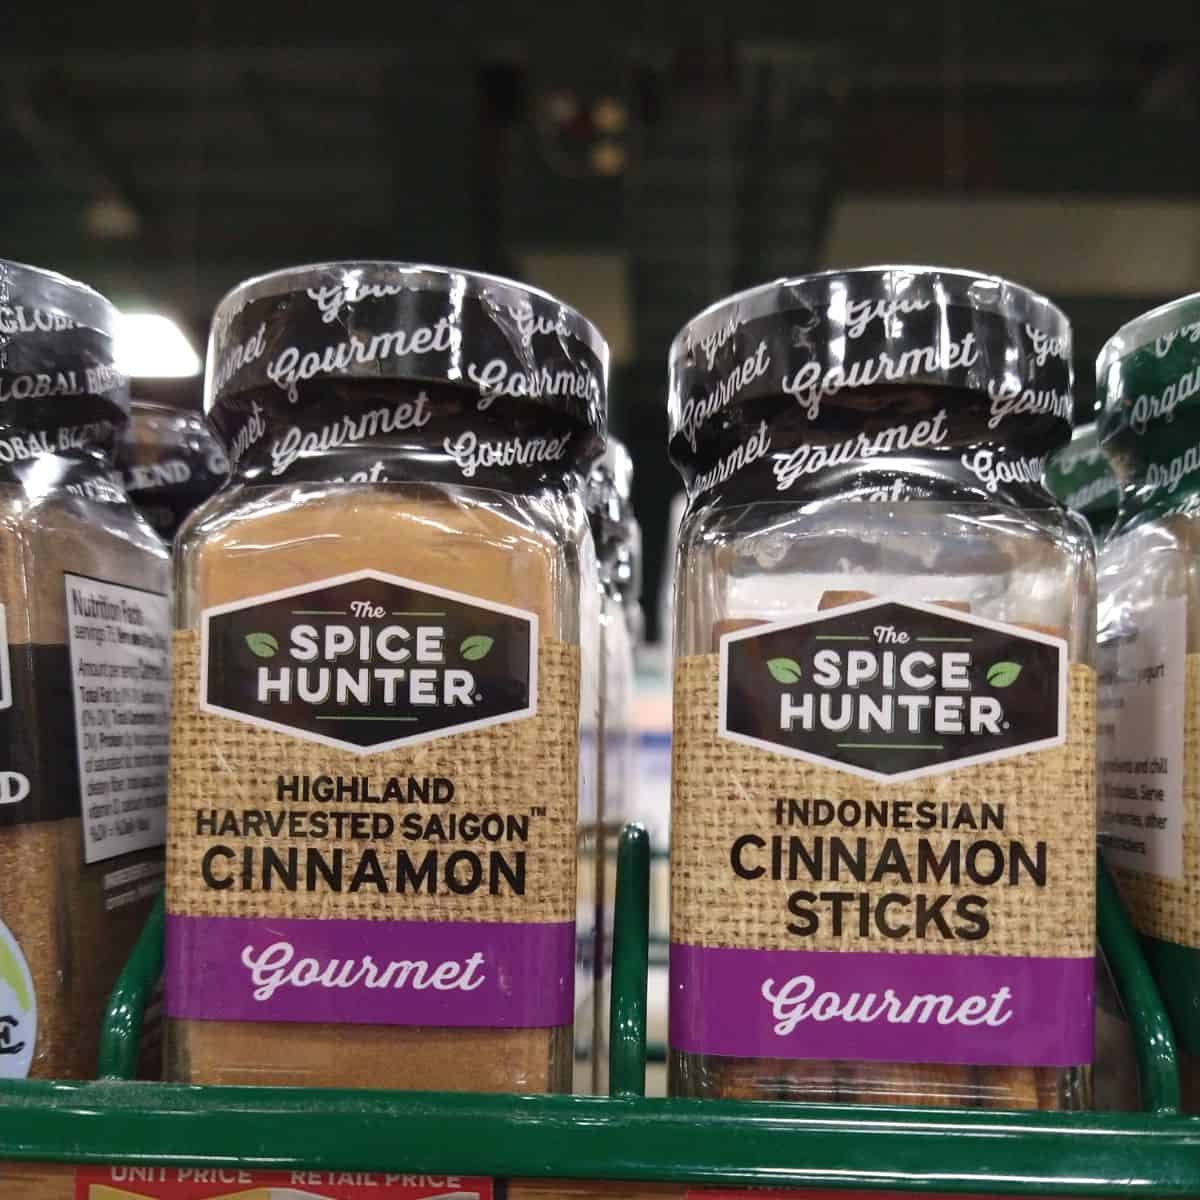 The Spice Hunter jars of Highland Harvested Saigon Cinnamon and Indonesian Cinnamon Sticks. 